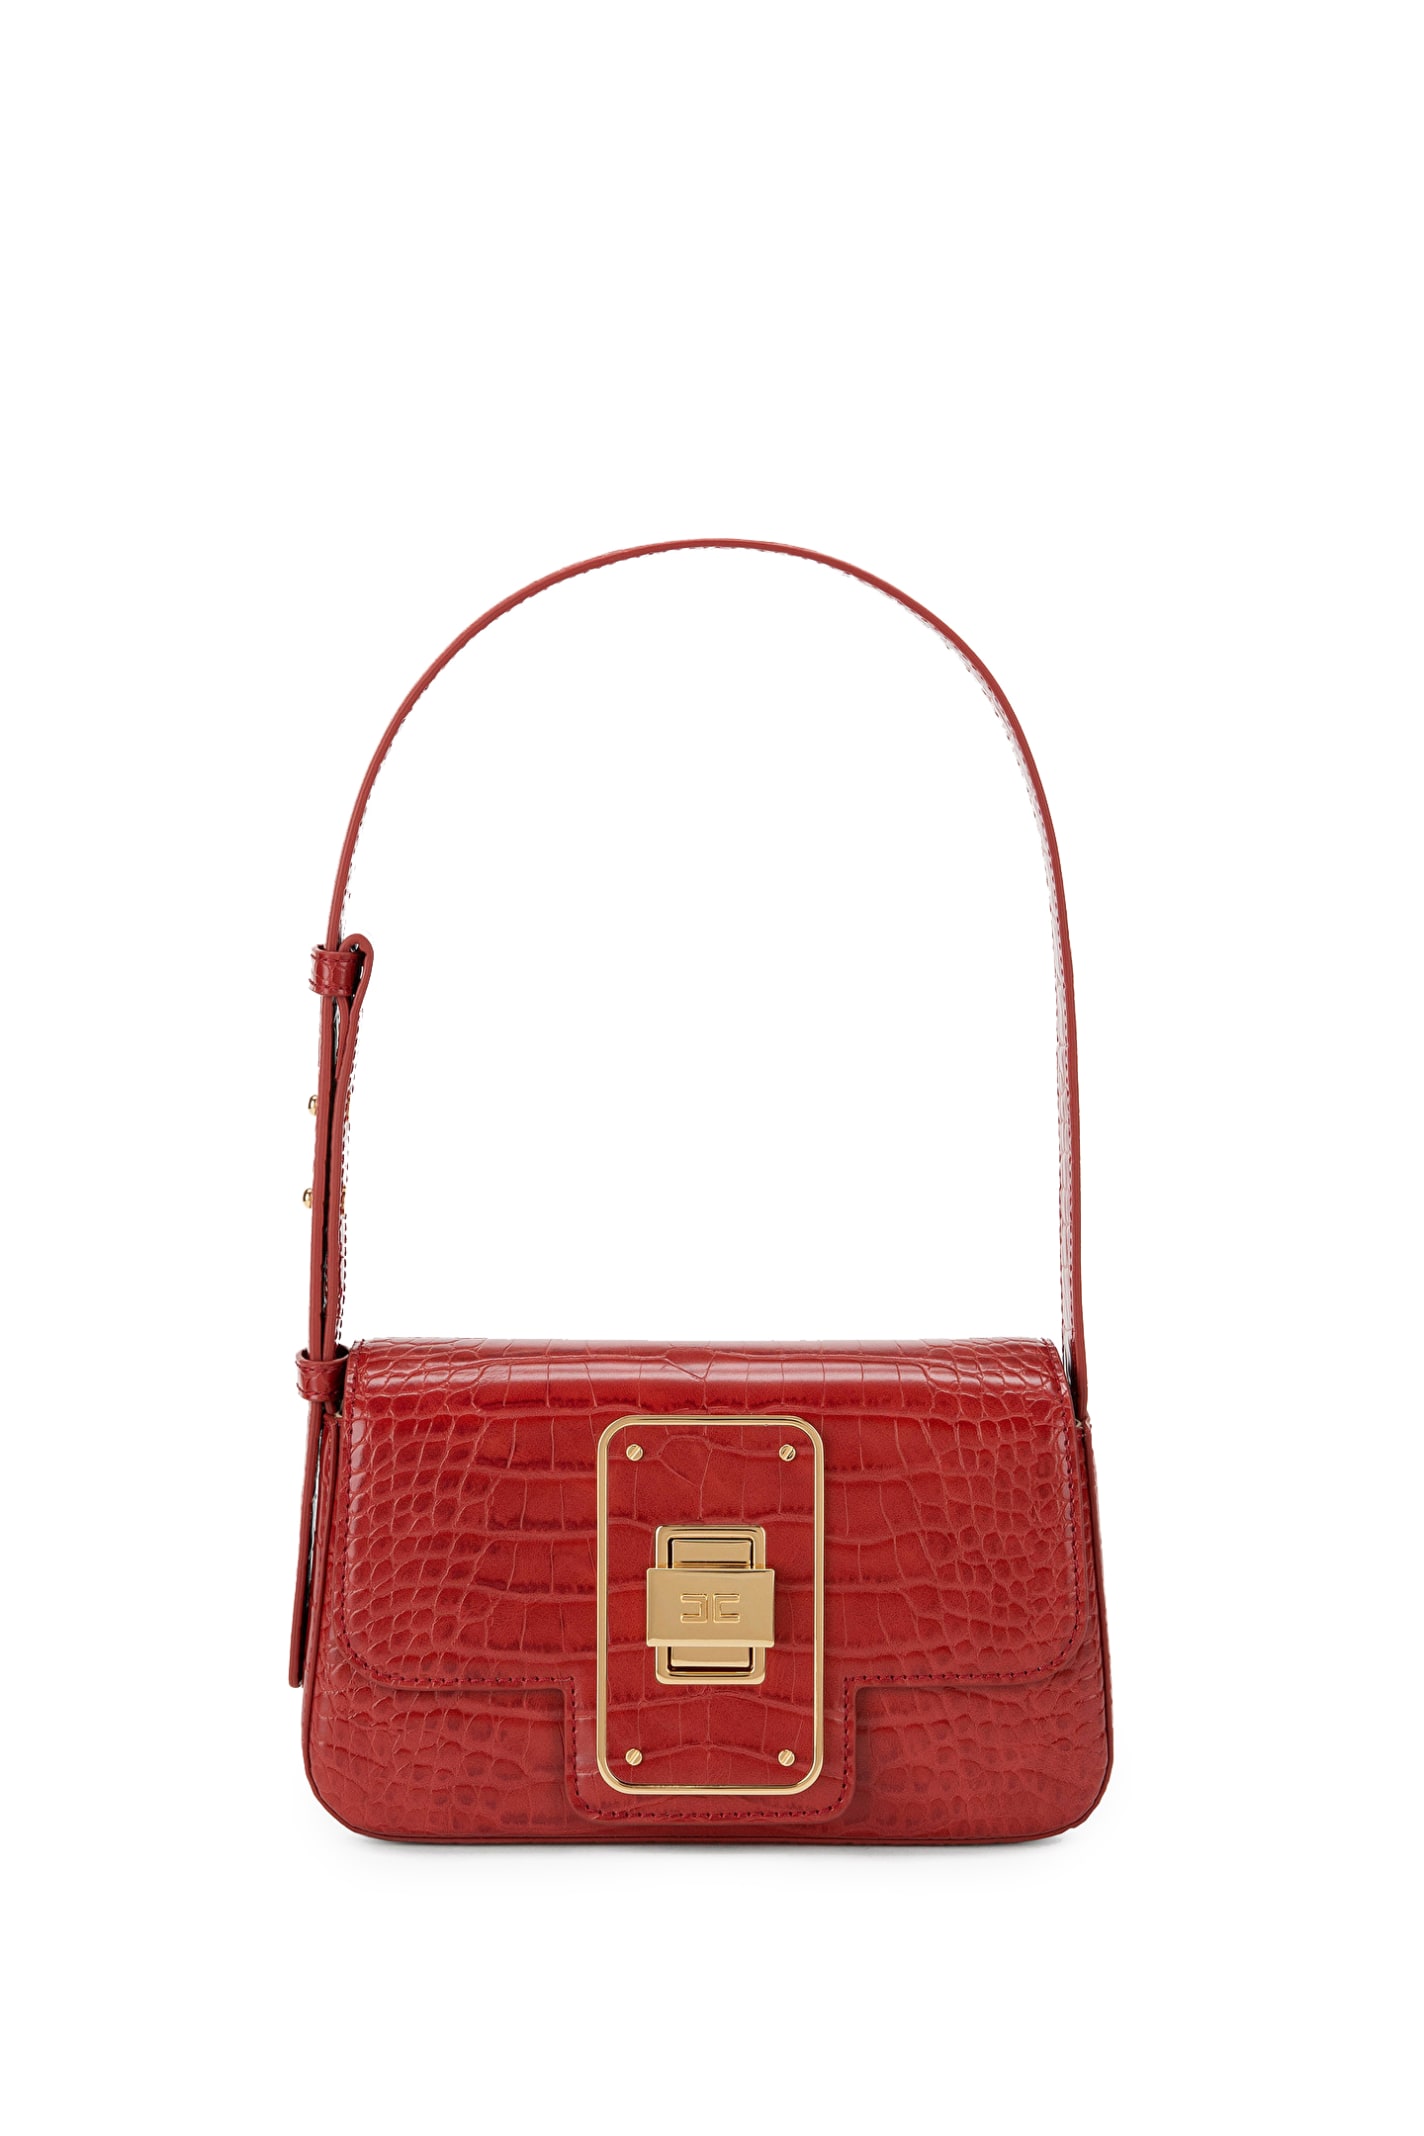 Women's ELISABETTA FRANCHI Bags Sale, Up To 70% Off | ModeSens